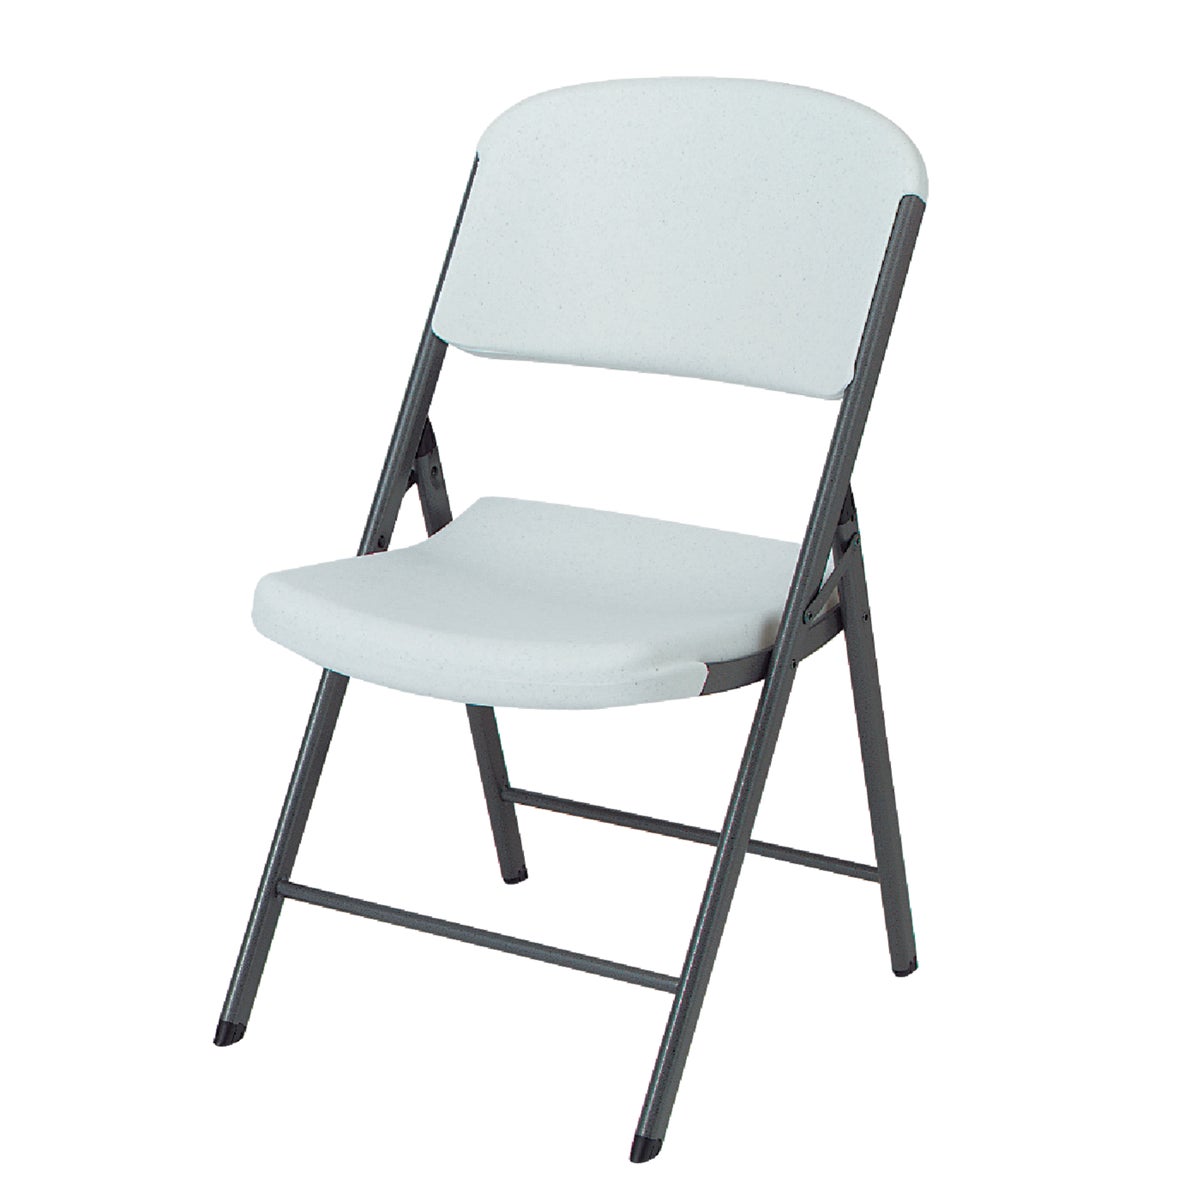 Lifetime Contoured Folding Chair, White